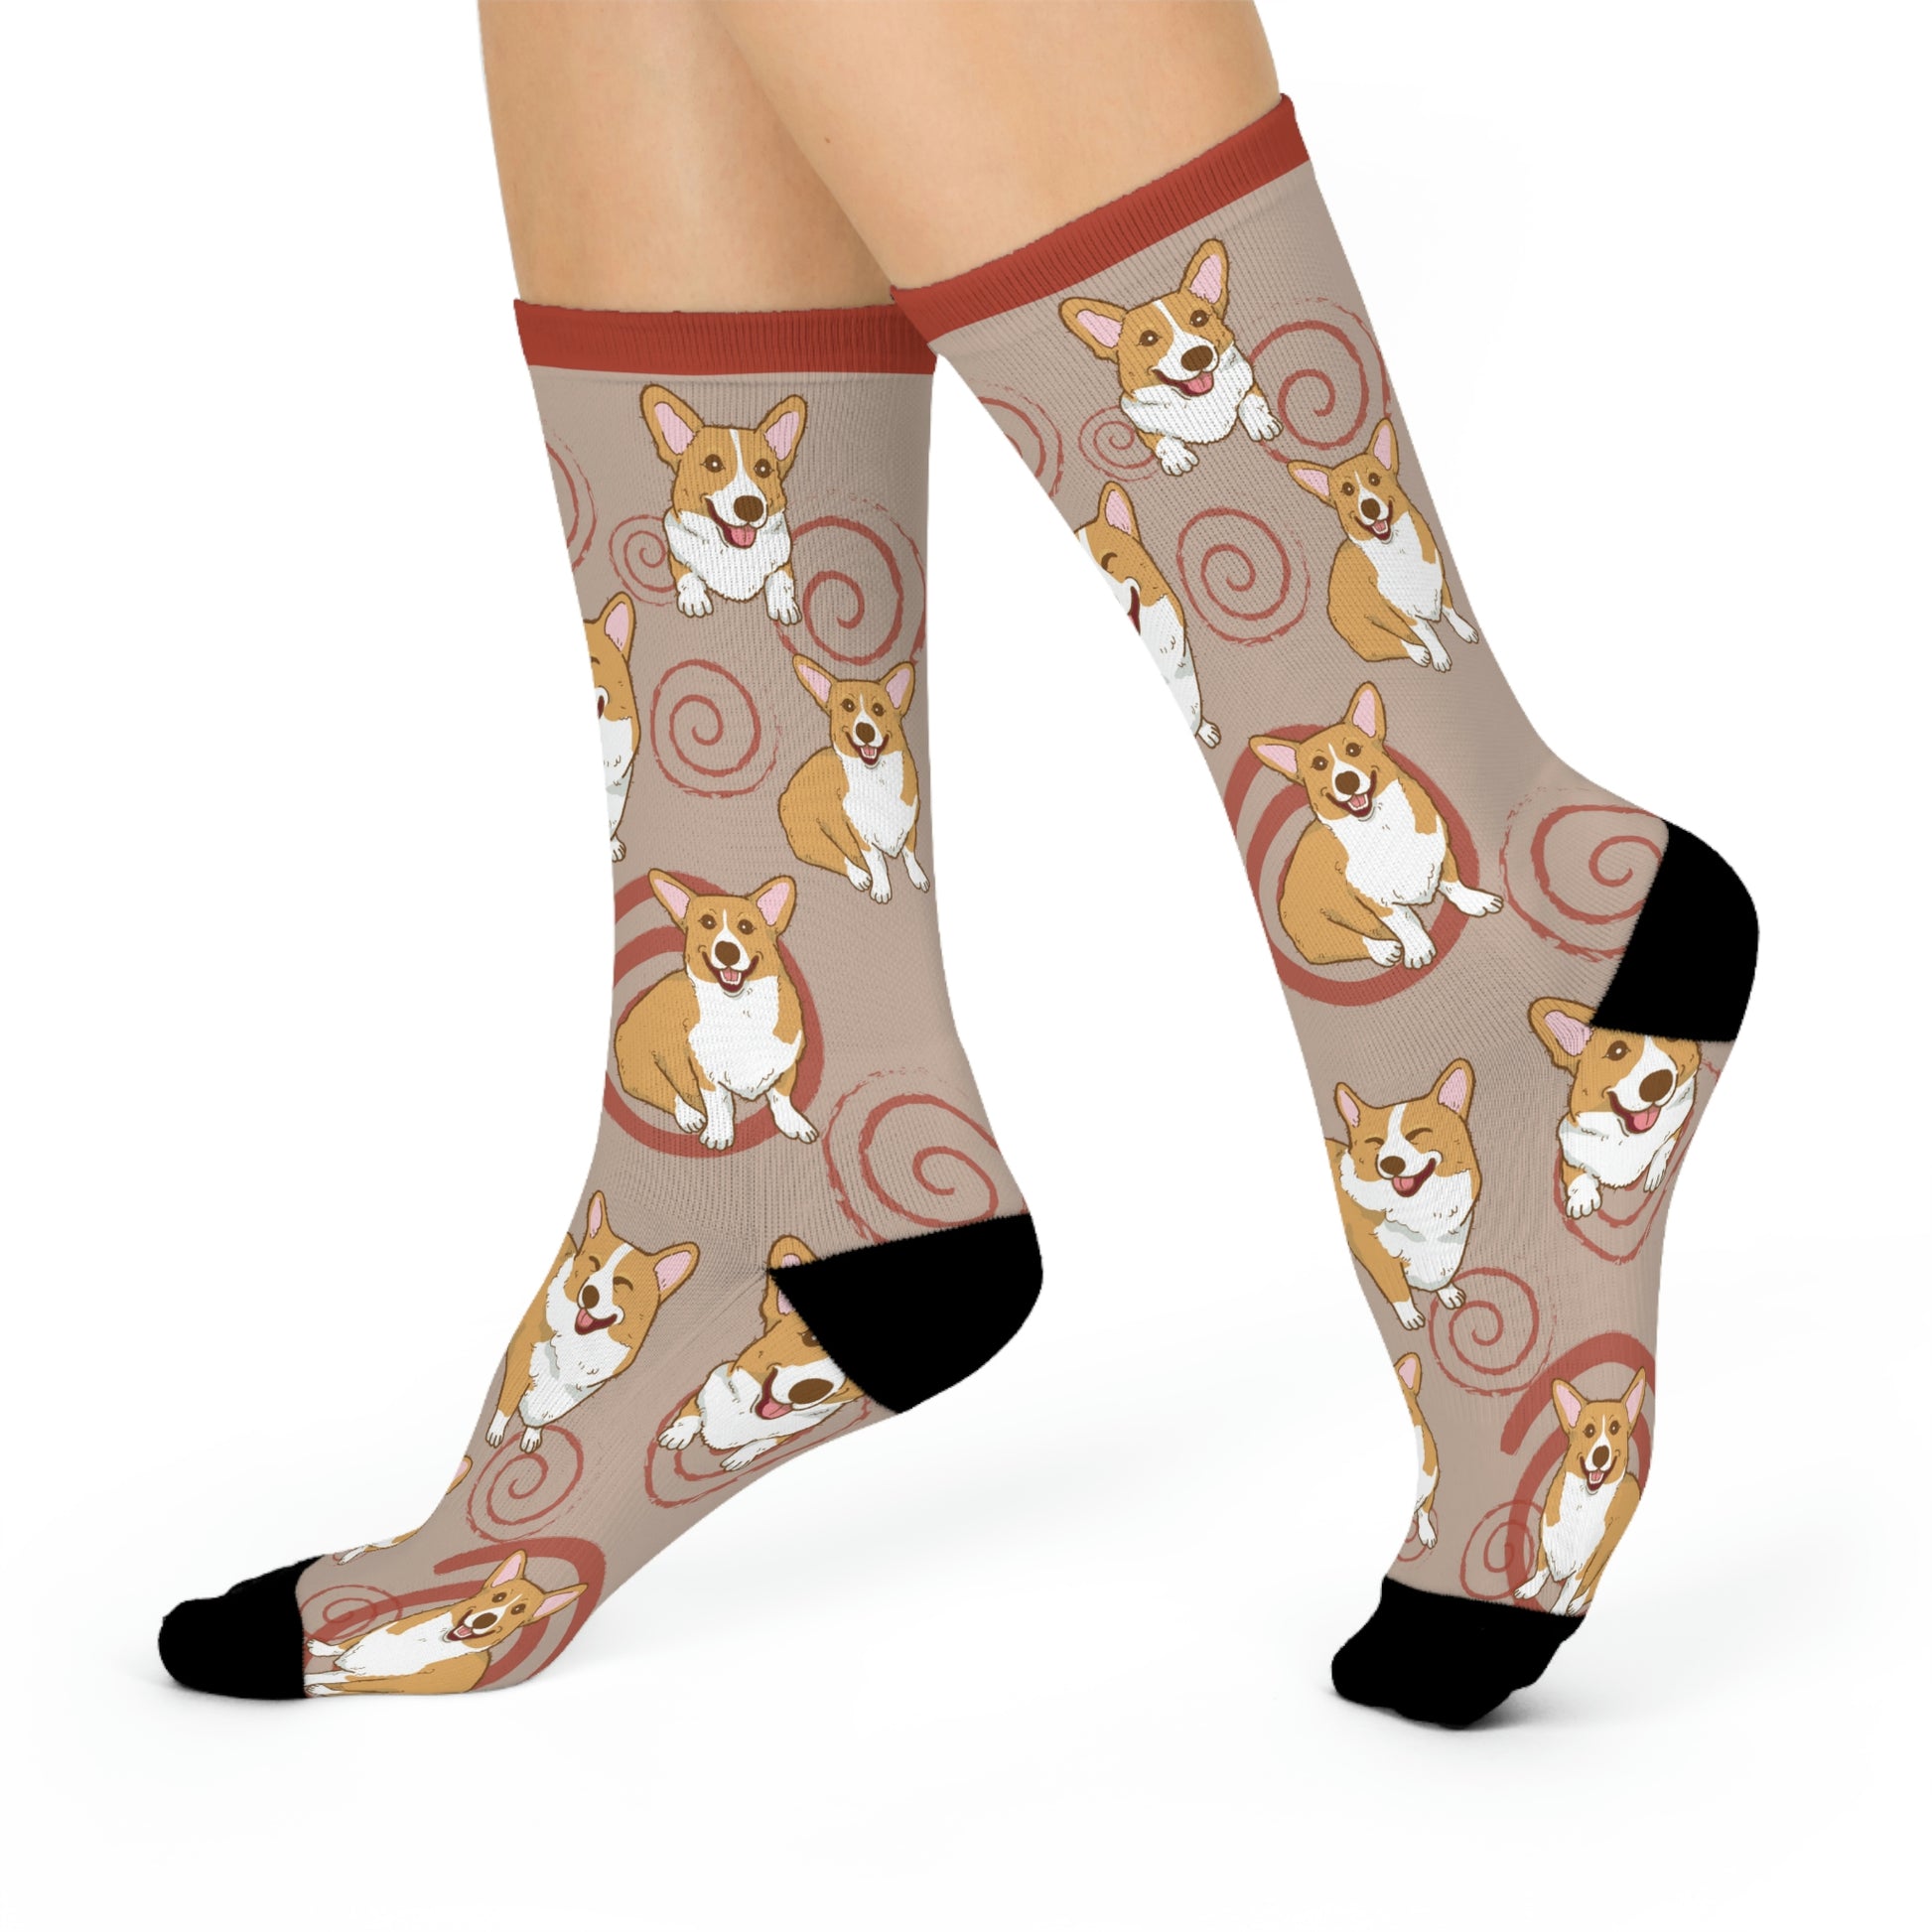 Corgi Socks, Colorful Original, Fun, Trendy Design, Men's Women's Socks, Queen's Dog - The Dapper Dogg